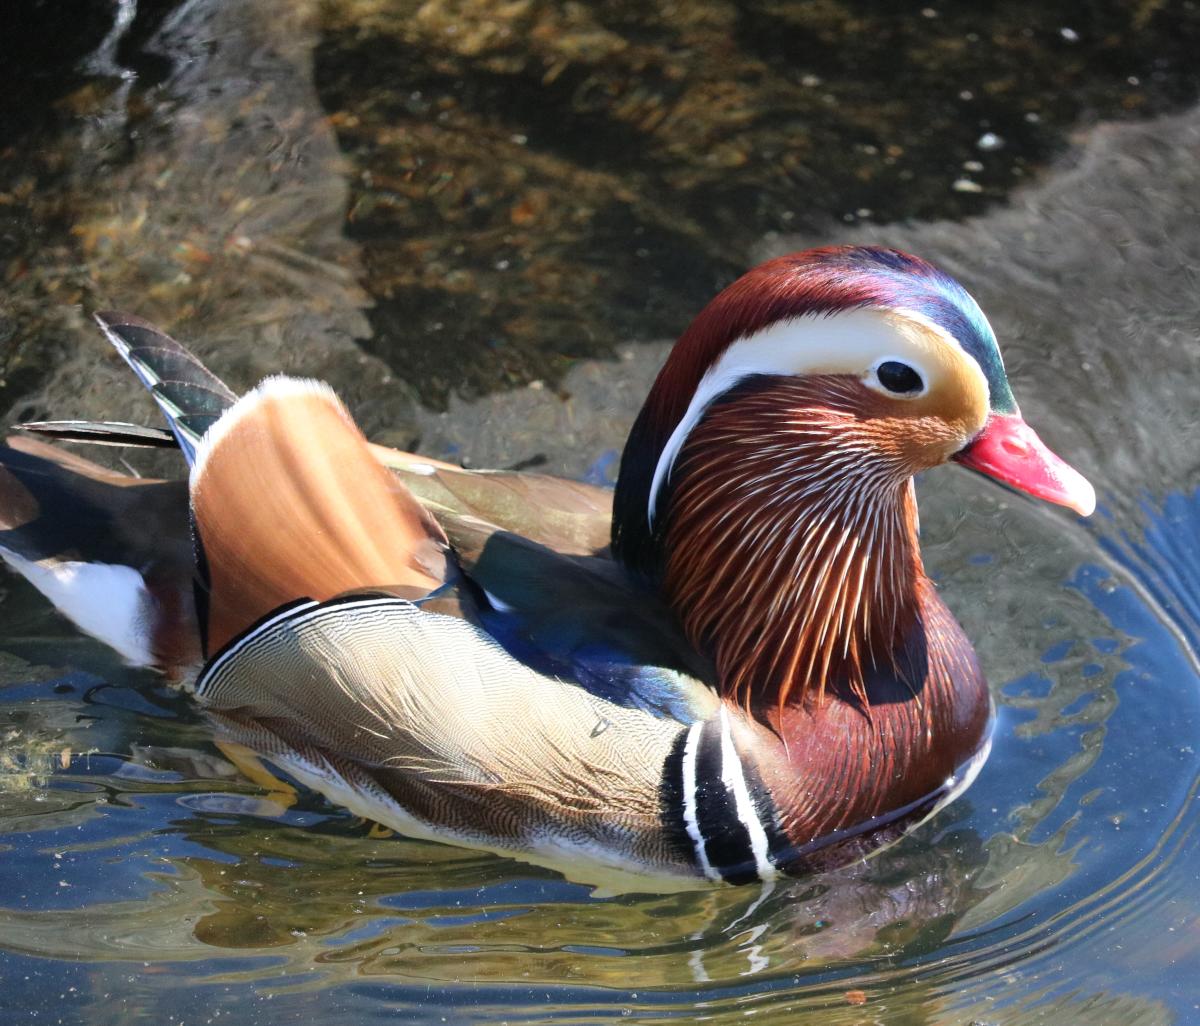 Mandarin duck in the sun